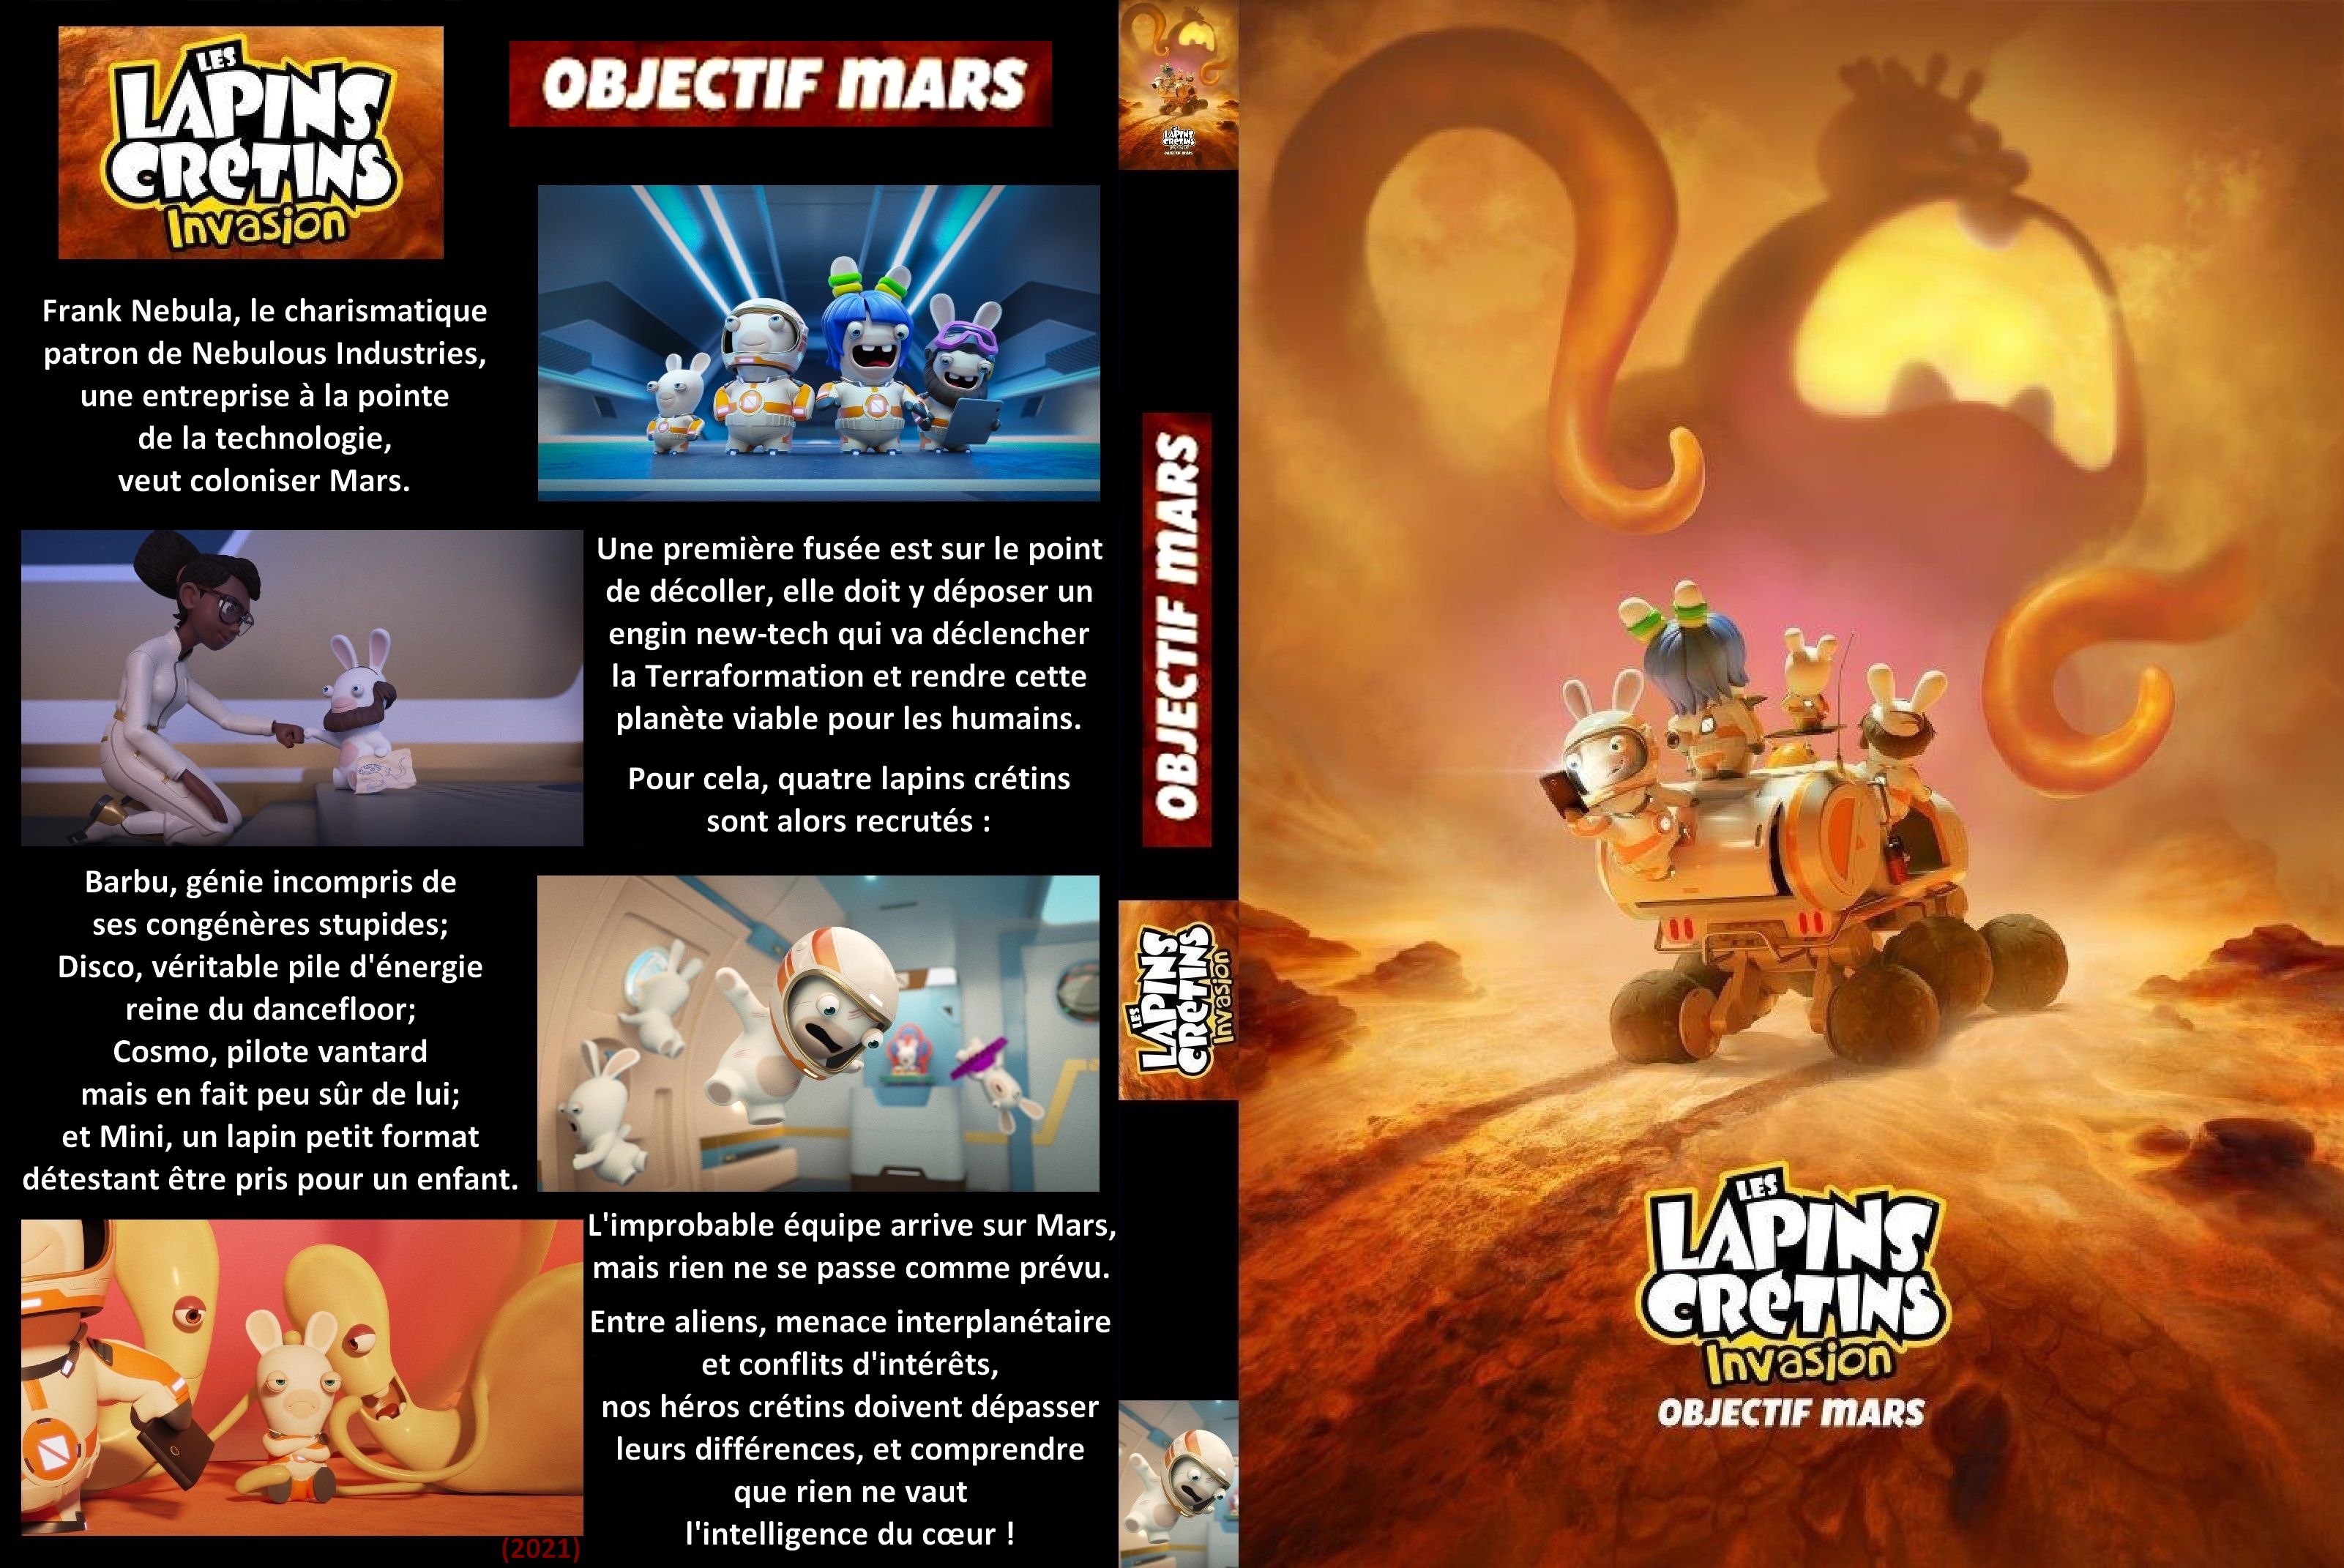 Jaquette DVD Les Lapins crtins Invasion - Objectif Mars custom